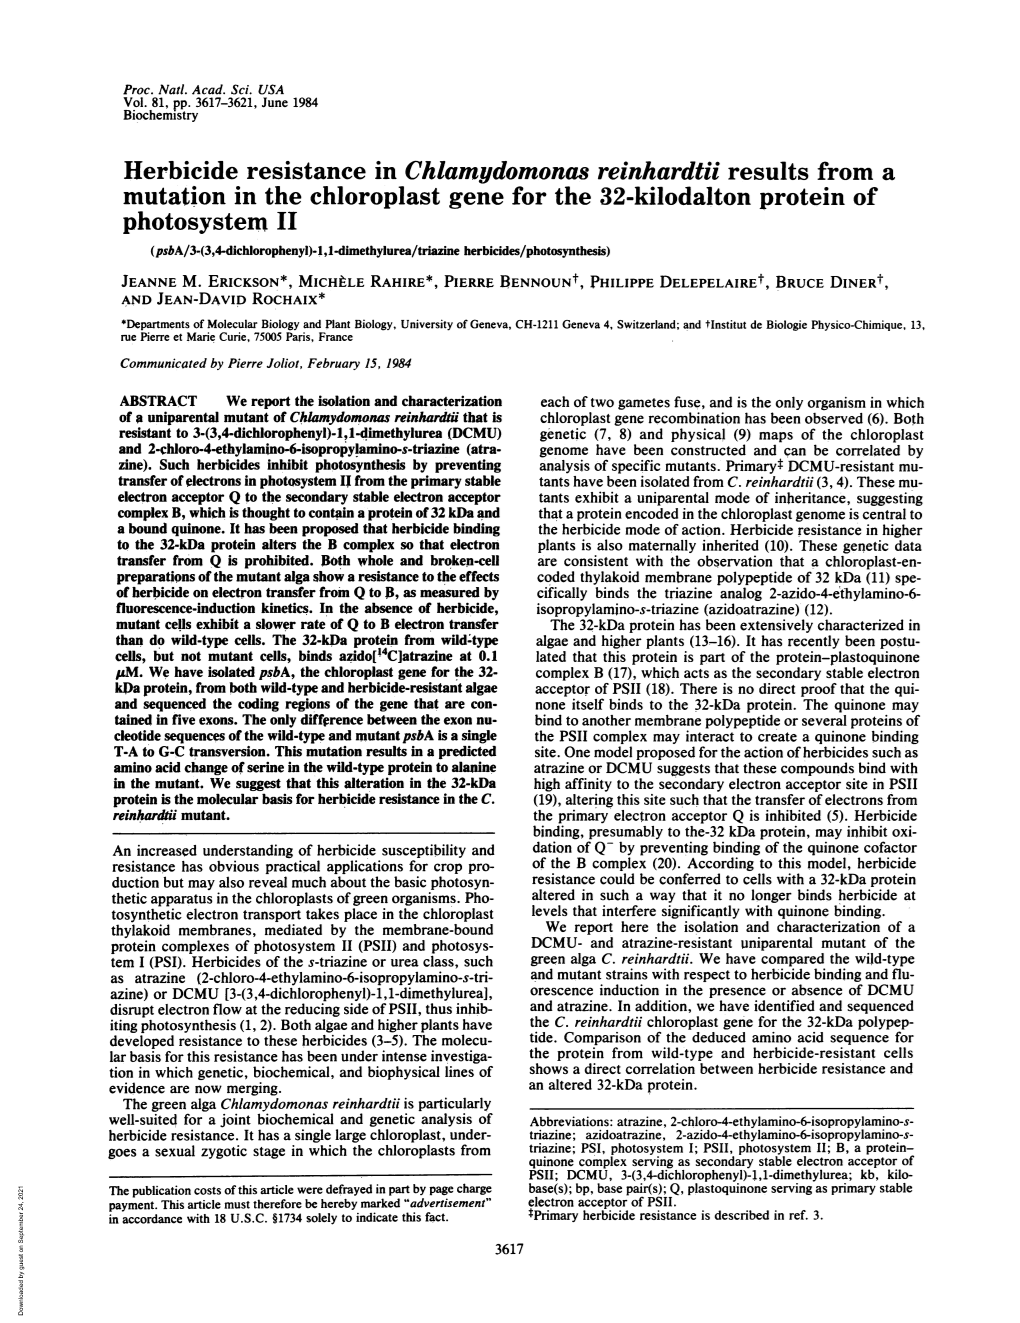 Herbicide Resistance in Chlamydomonas Reinhardtii Results